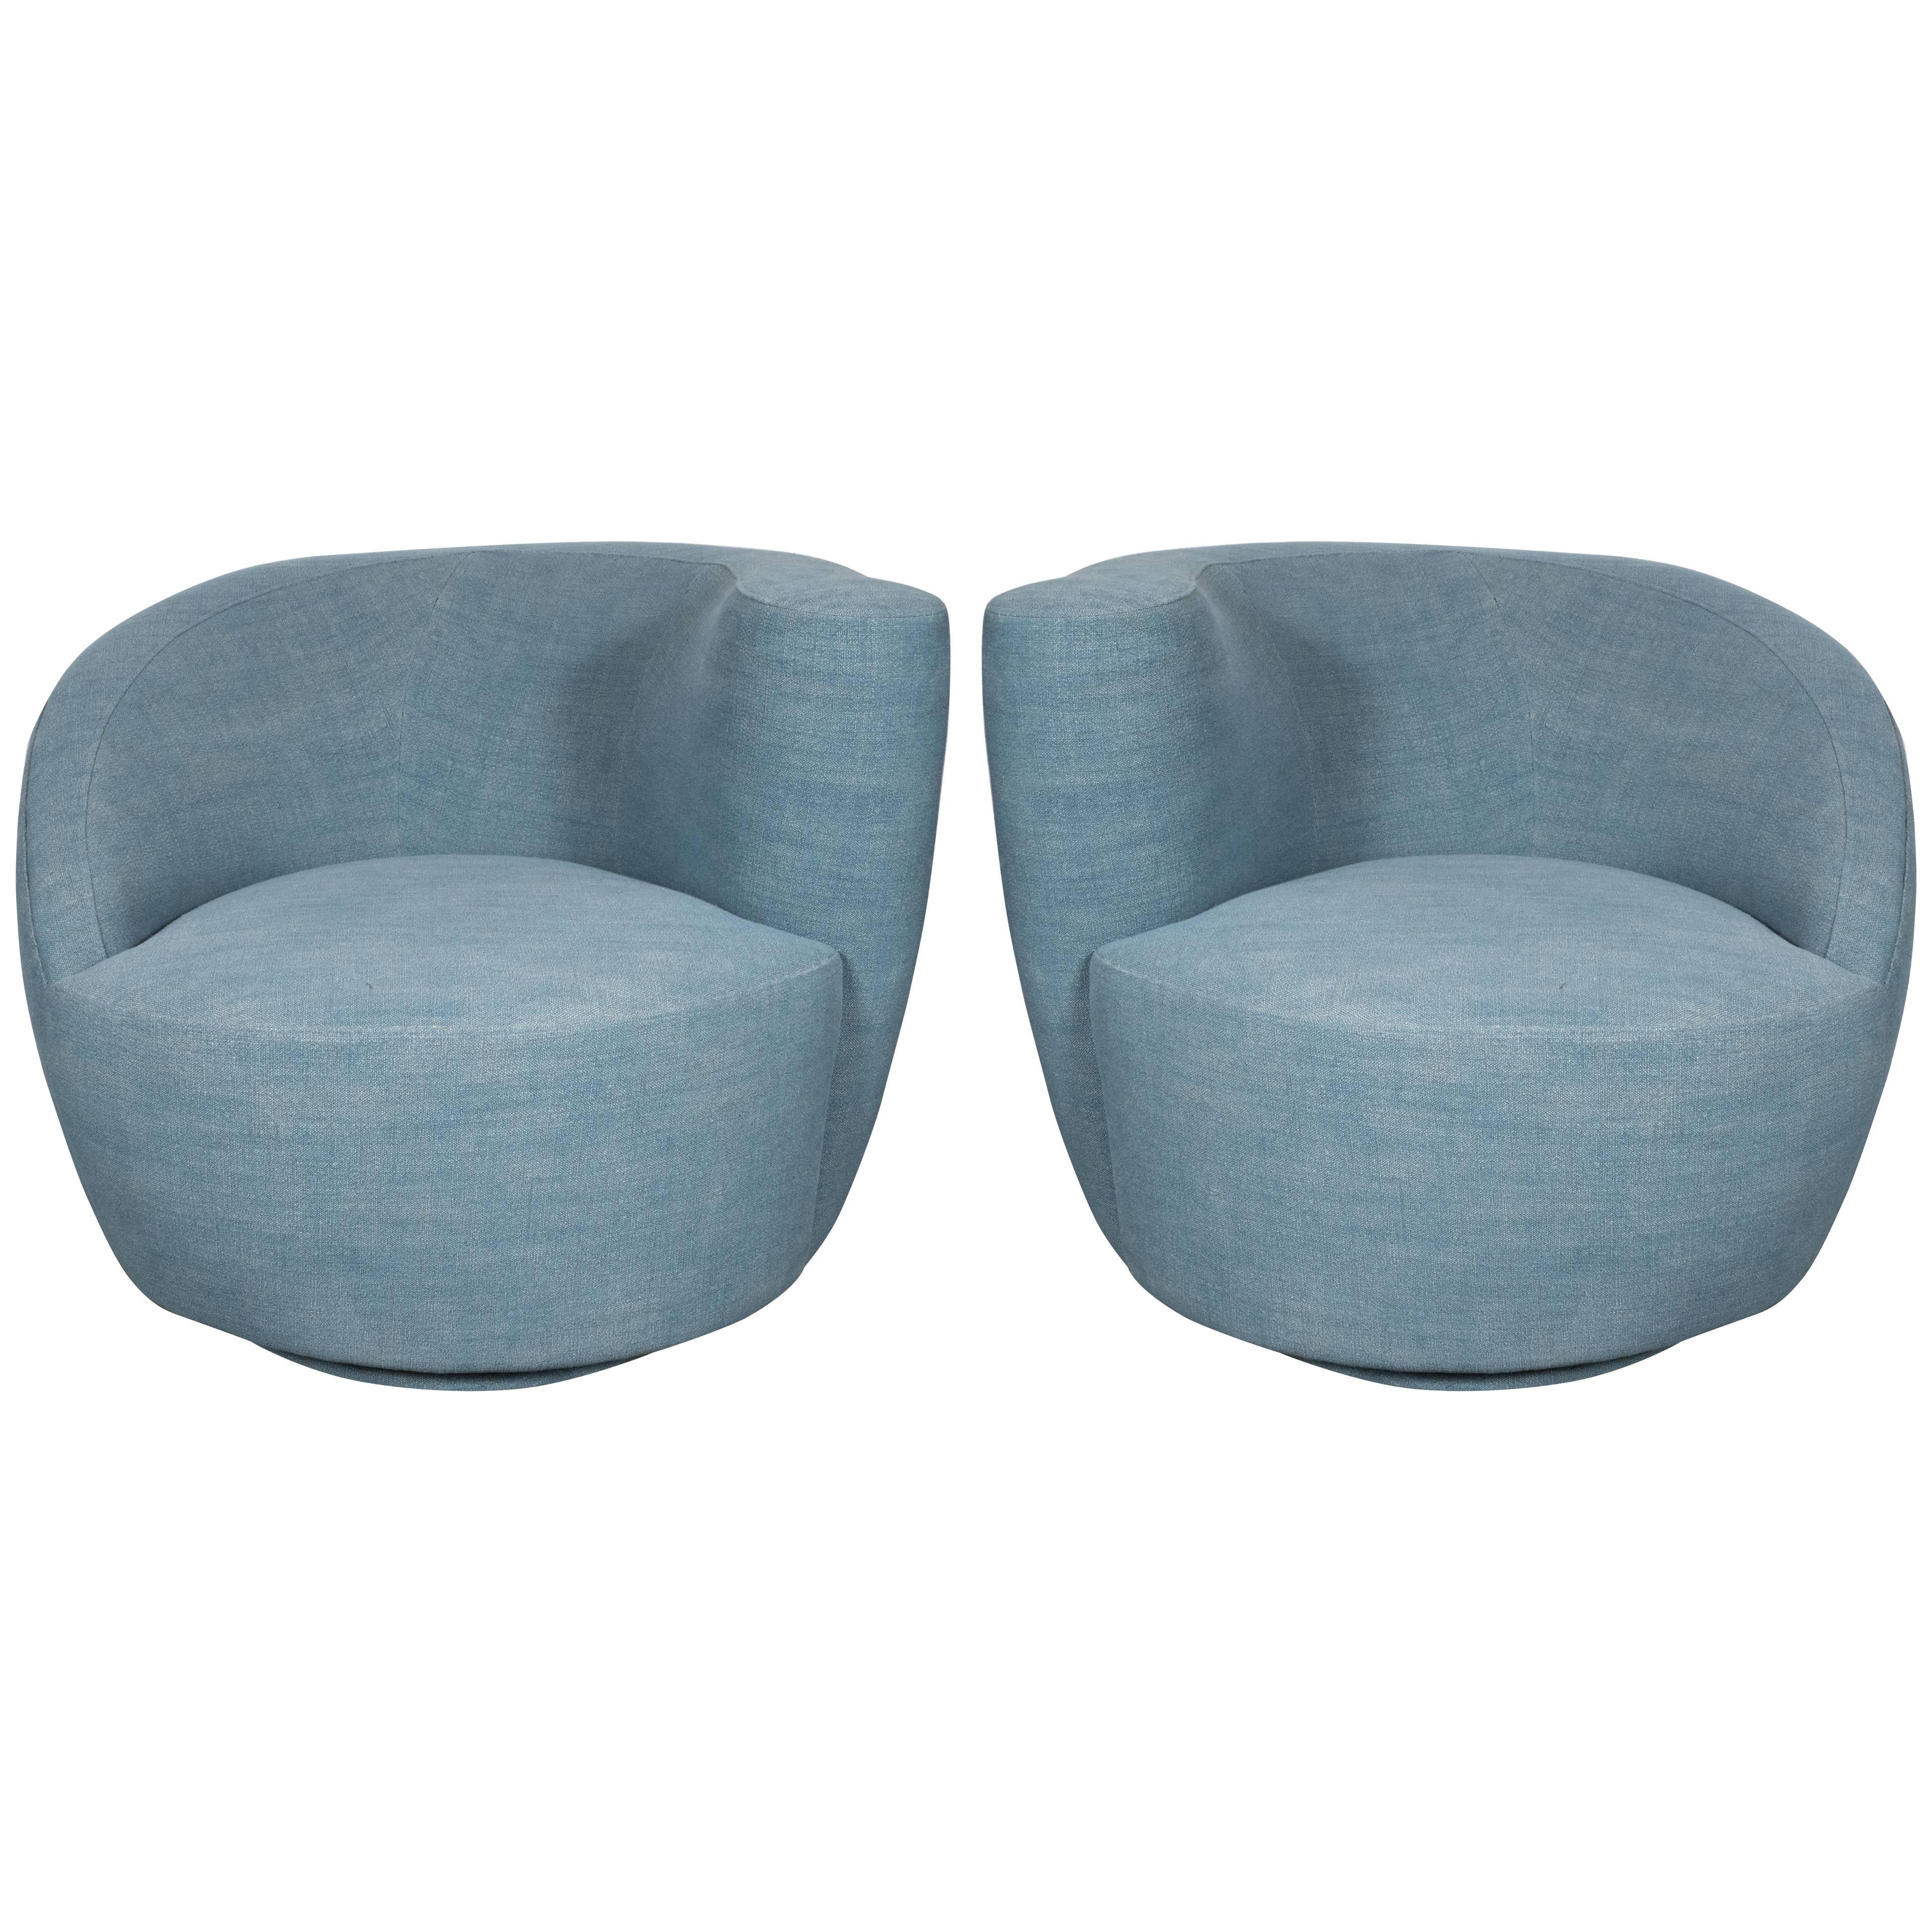 Pair of Mid-Century Modern Nautilus Chairs by Vladimir Kagan in Blue Twill